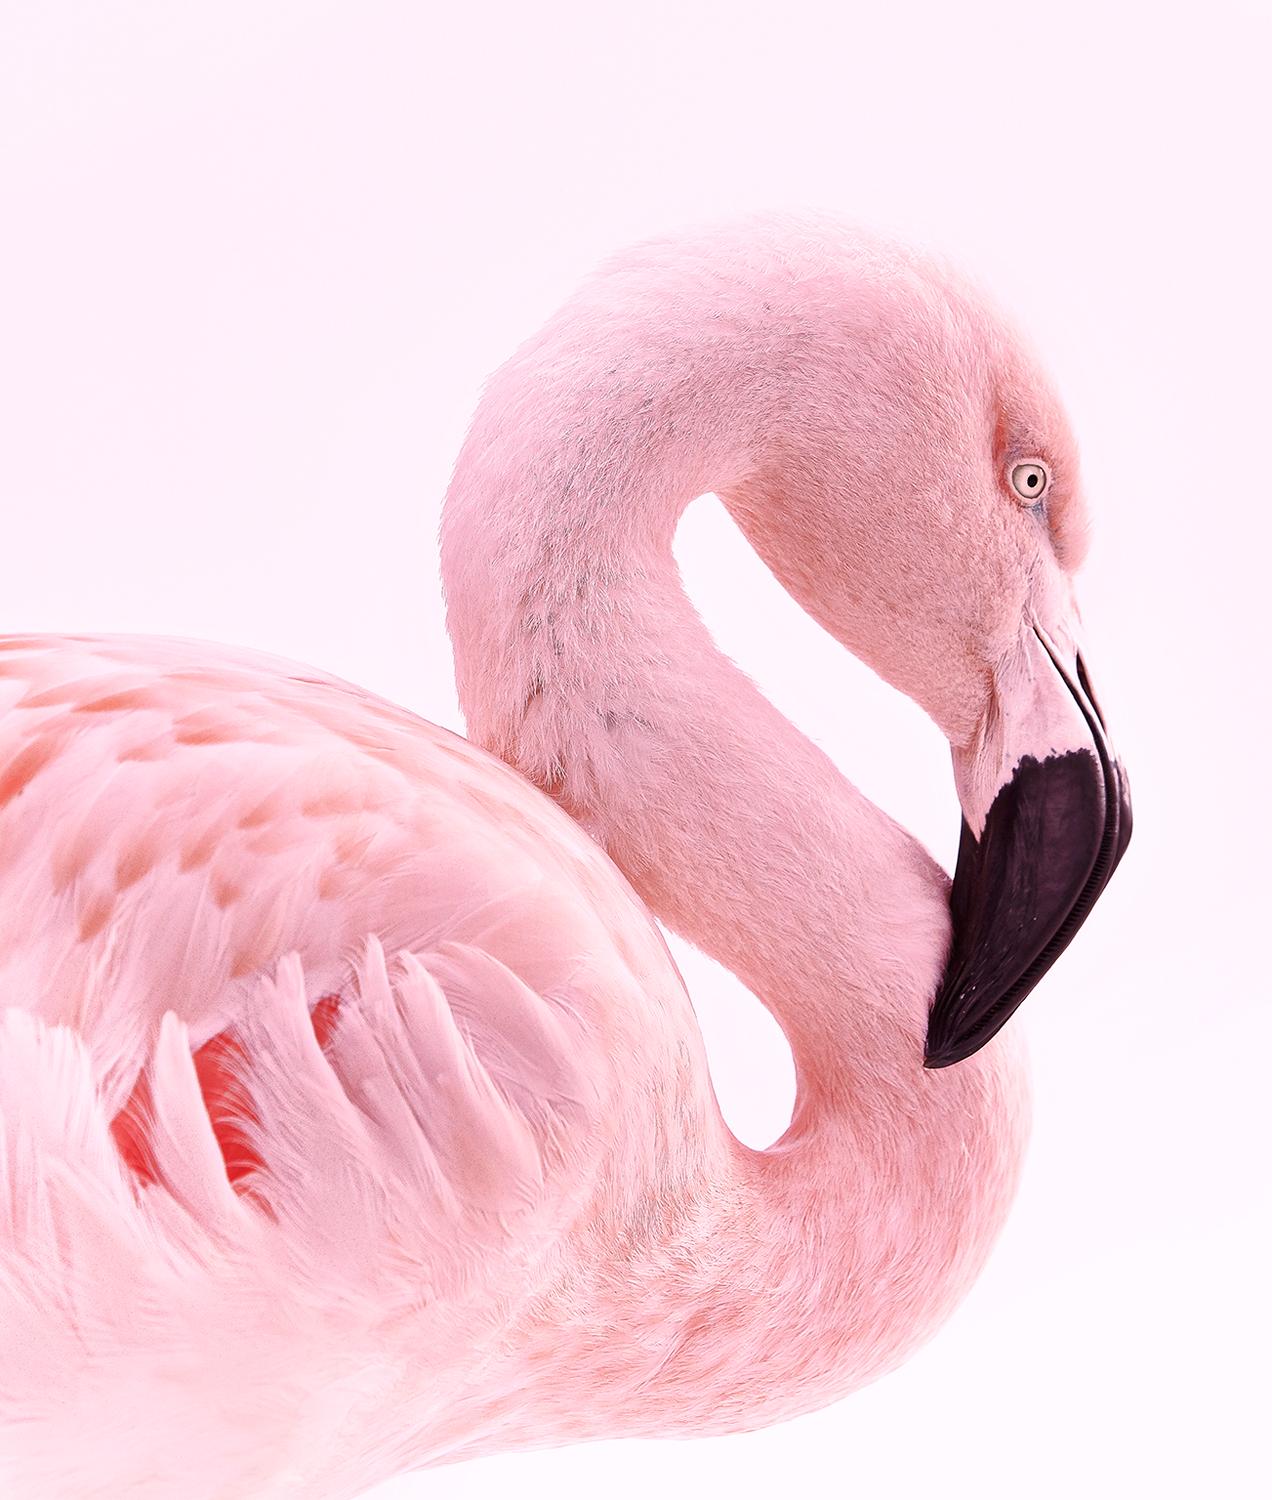 Flamingo No. 3 - Photograph by Chris Gordaneer